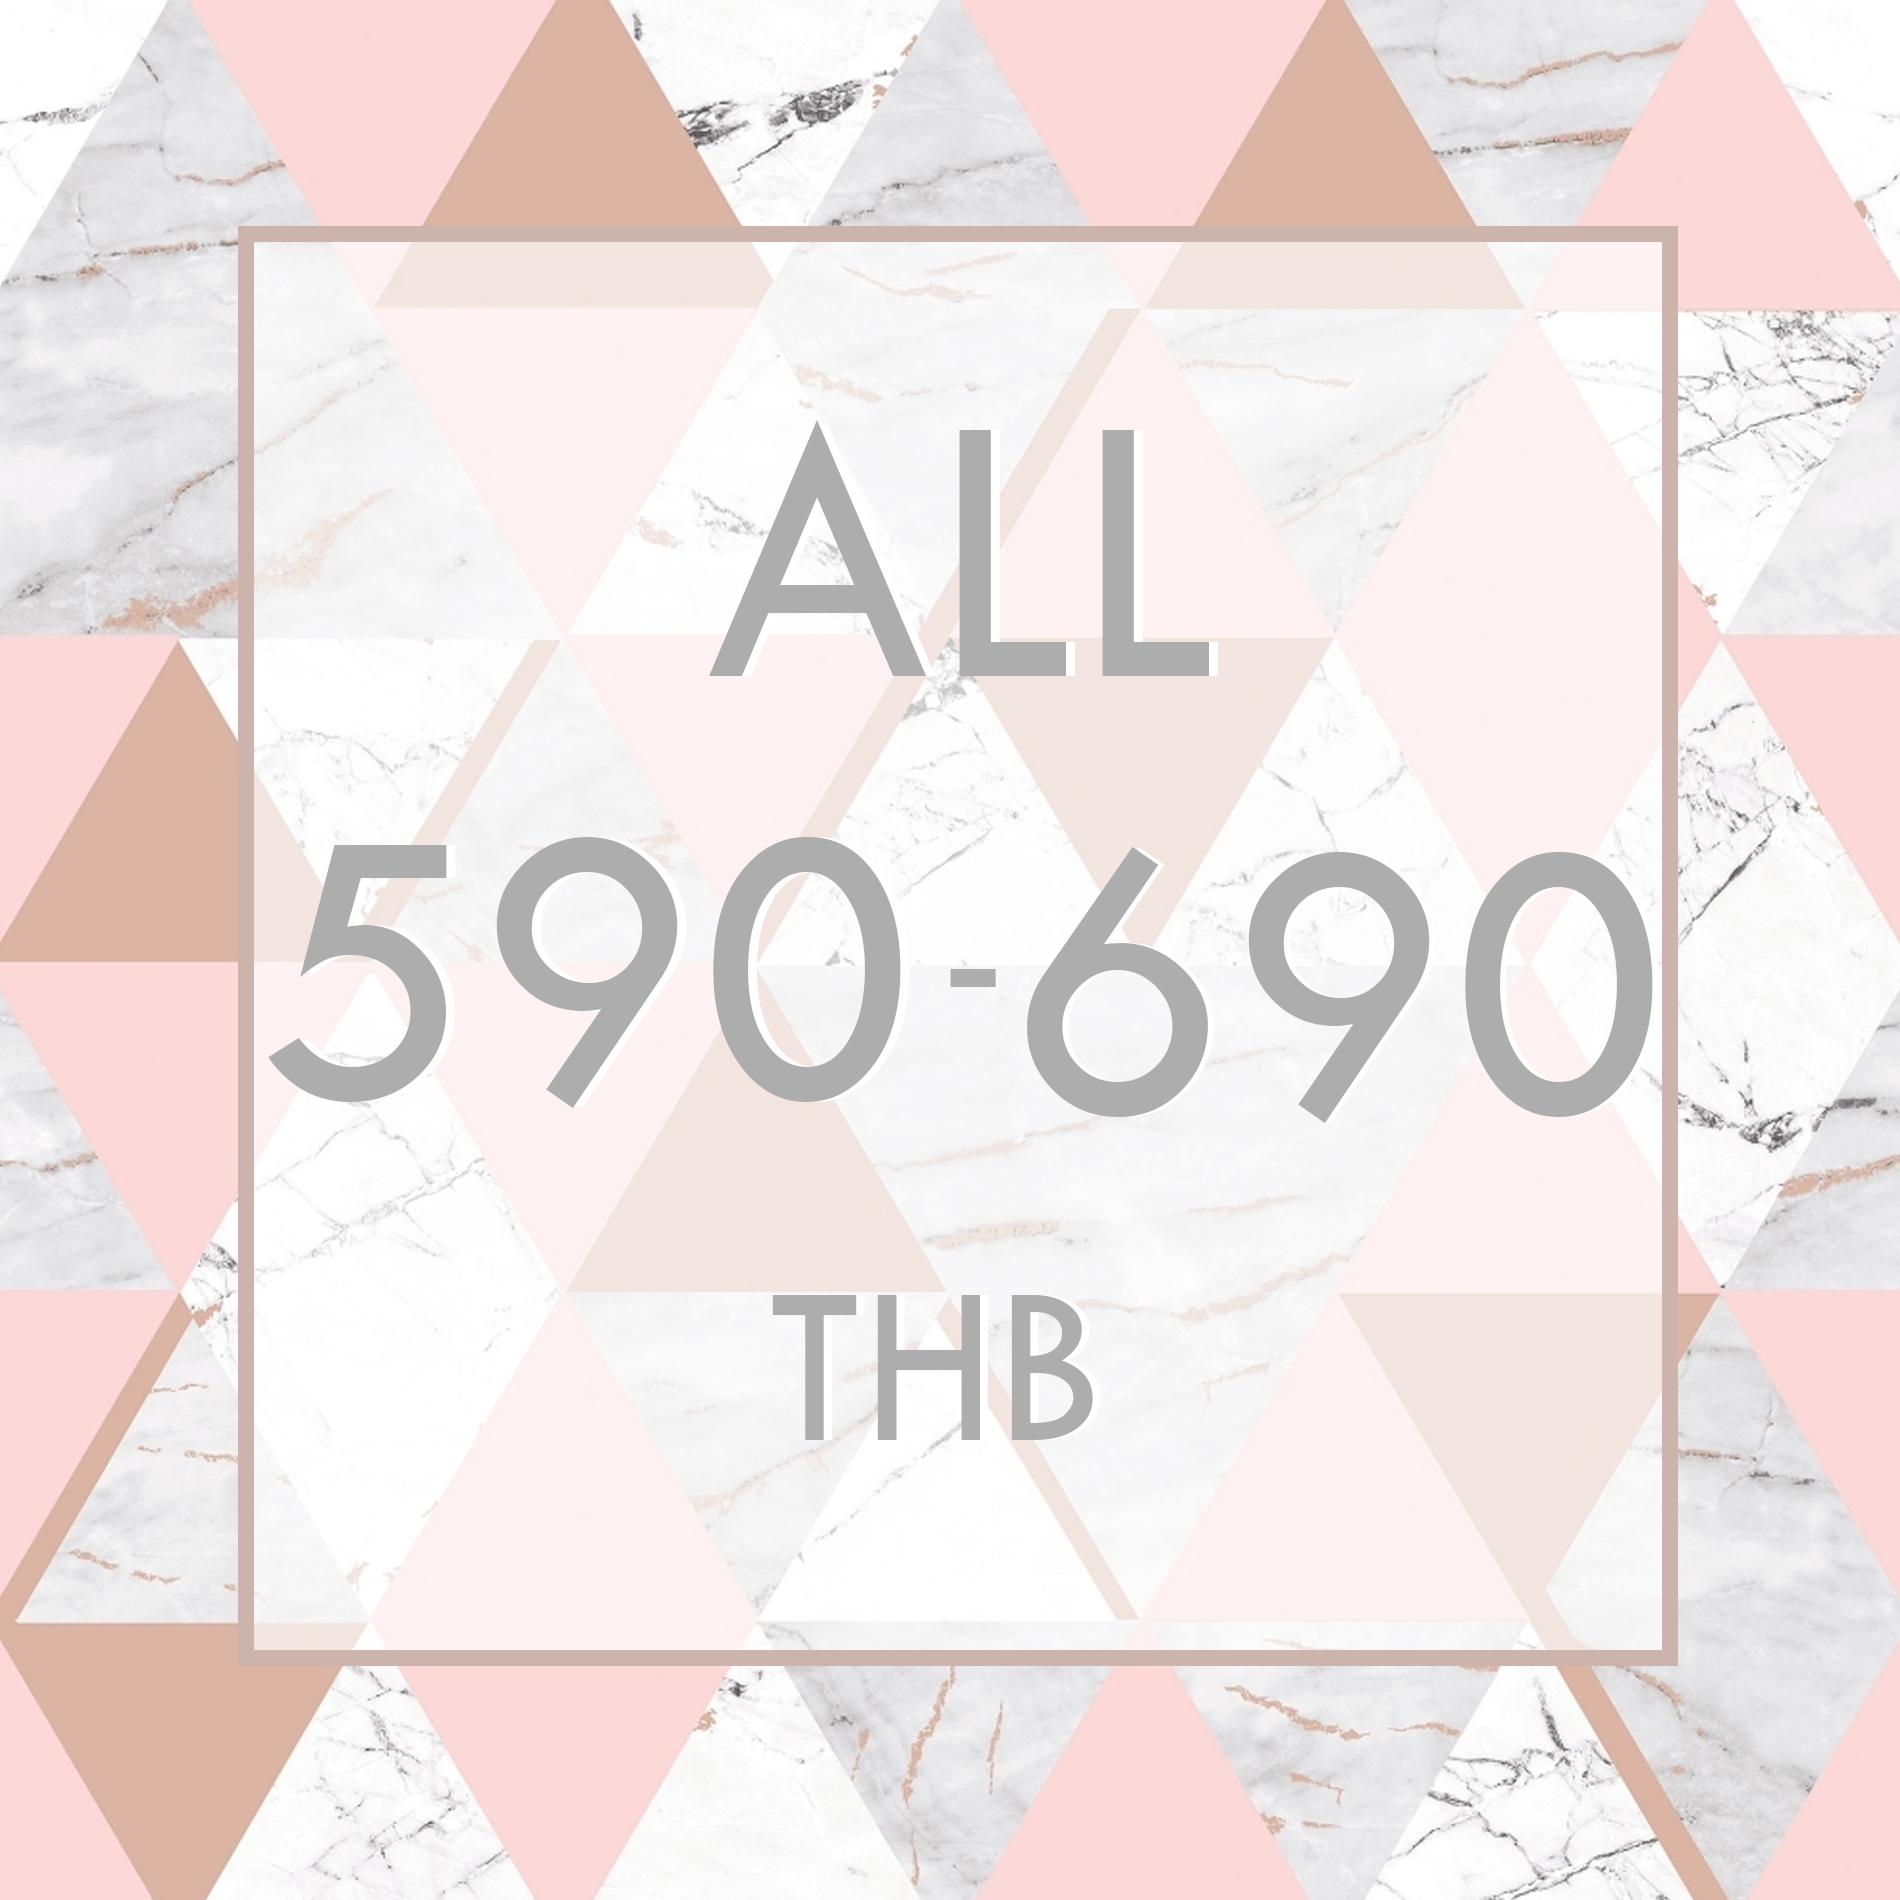 ALL590-690THB